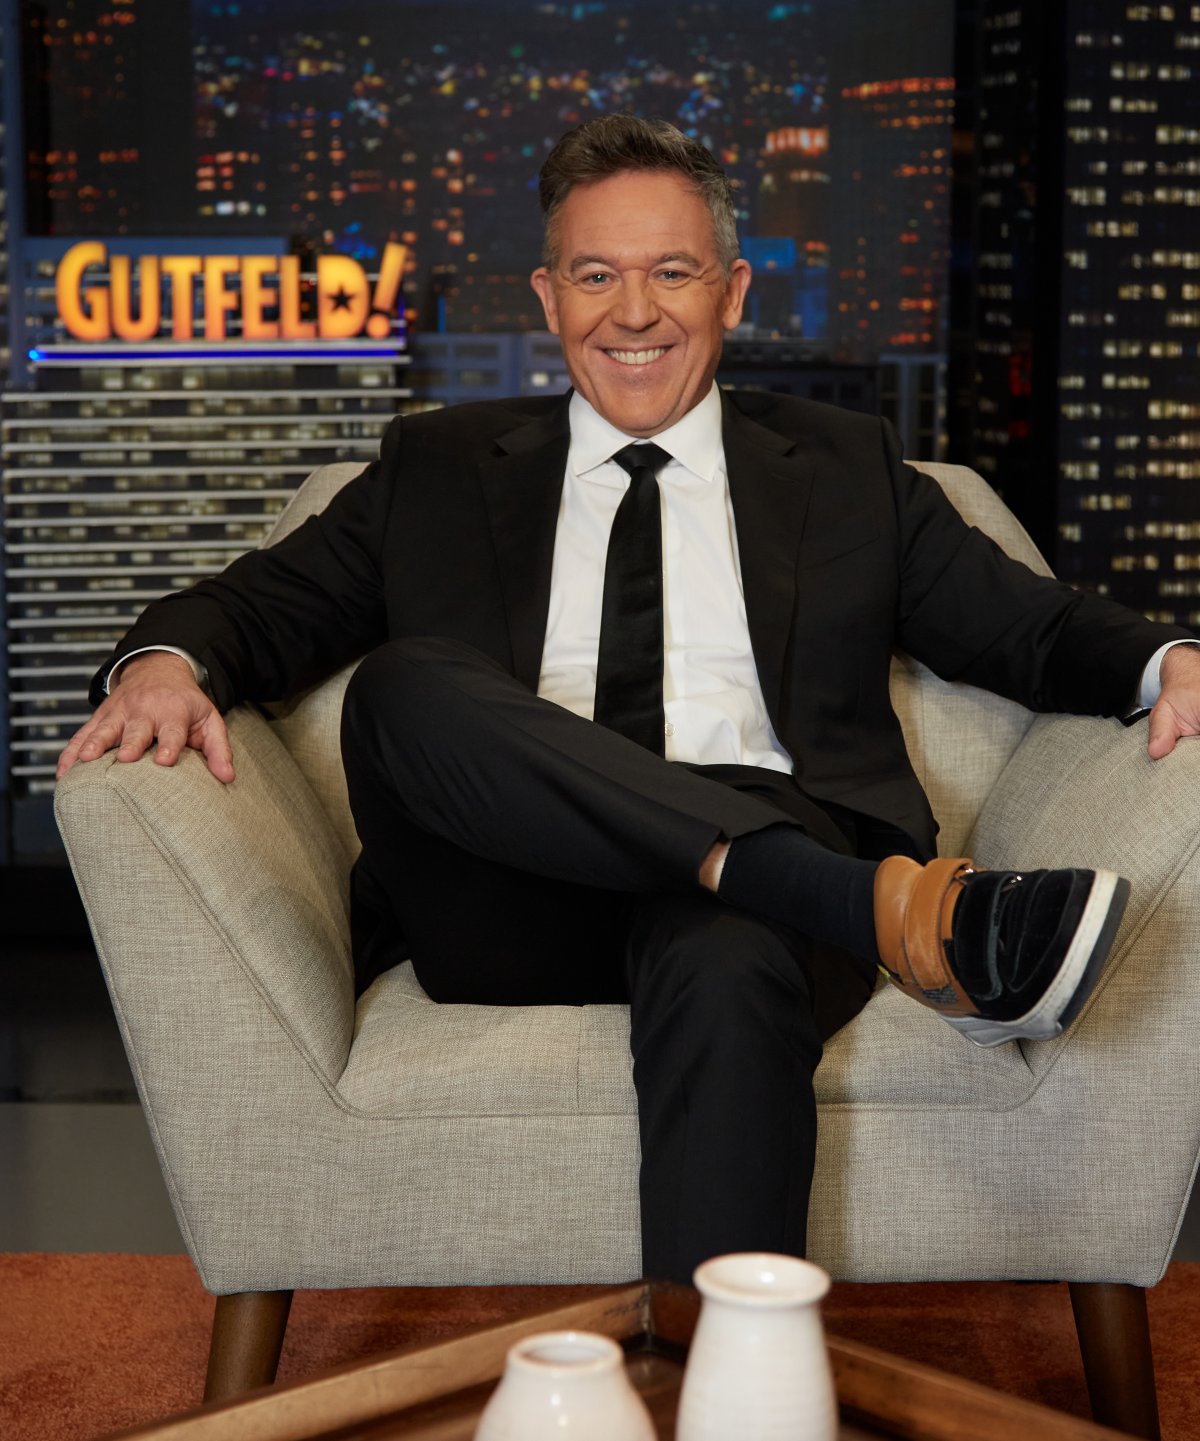 Greg Gutfeld Crowned 'King of Late-Night' as Ratings Topping Colbert,  Kimmel, Fallon